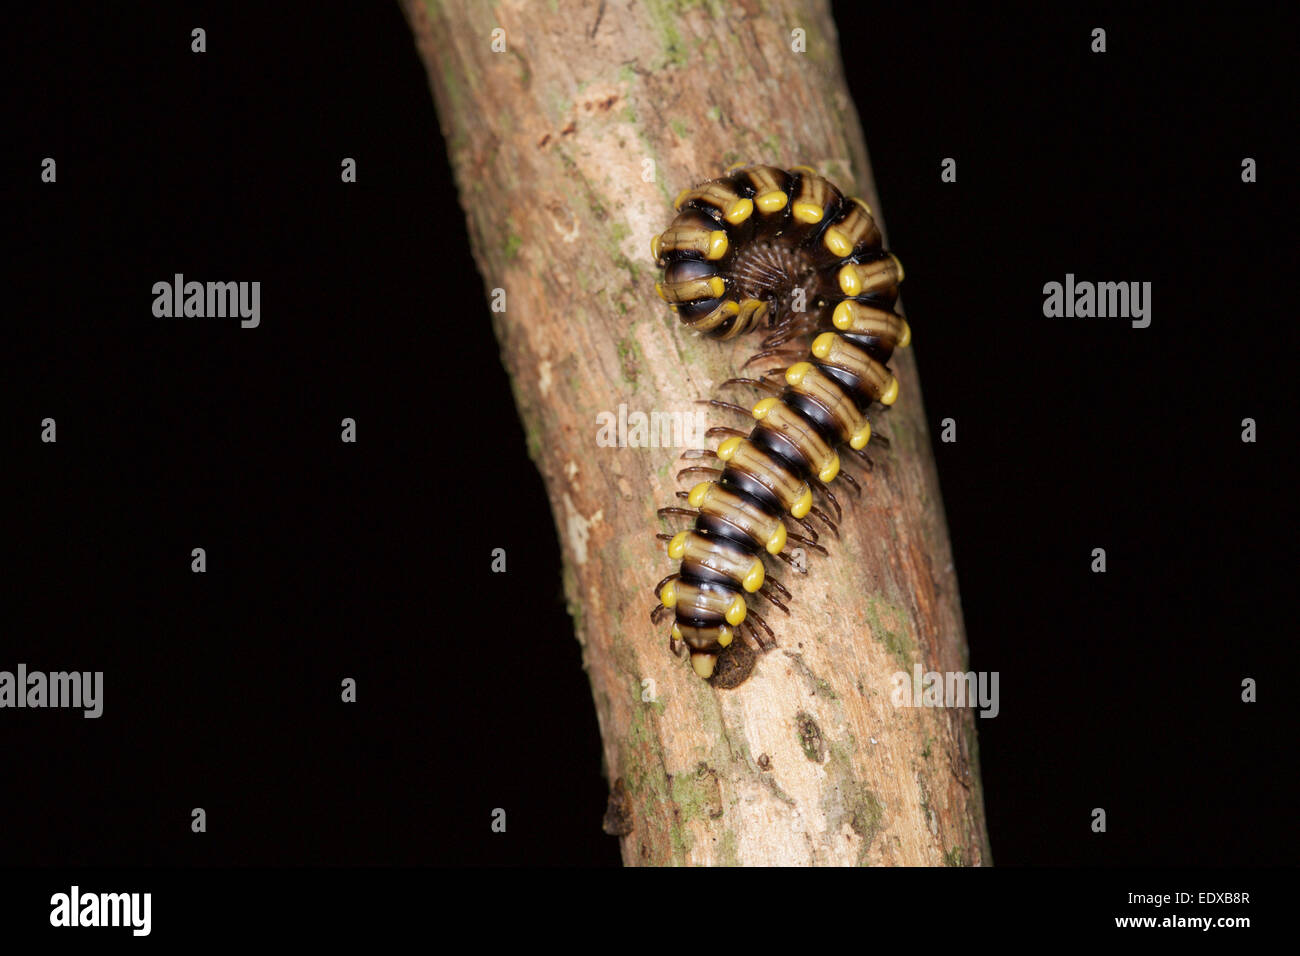 Paradoxosomatidae millipede. Kaeng Krachan National Park, Thailand. Stock Photo